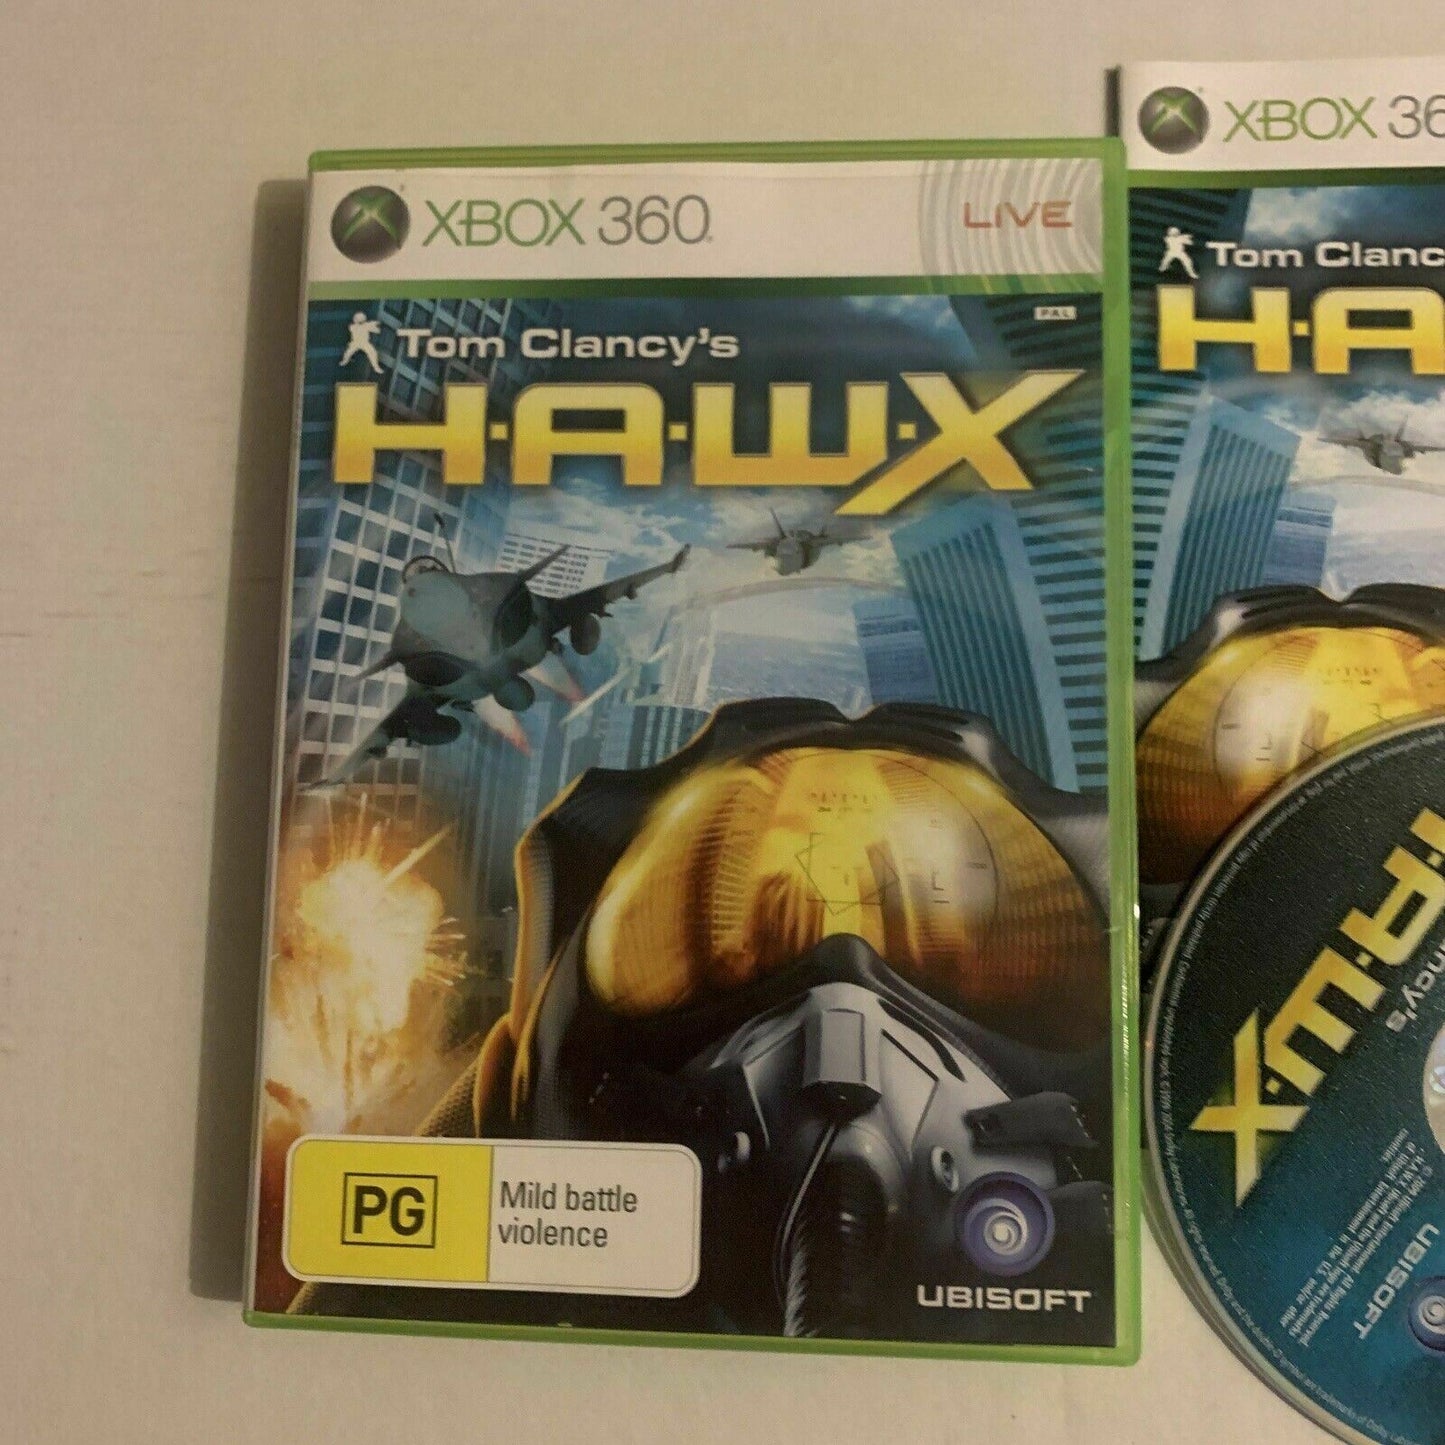 Tom Clancy's HAWX - Microsoft Xbox 360 PAL Game with Manual